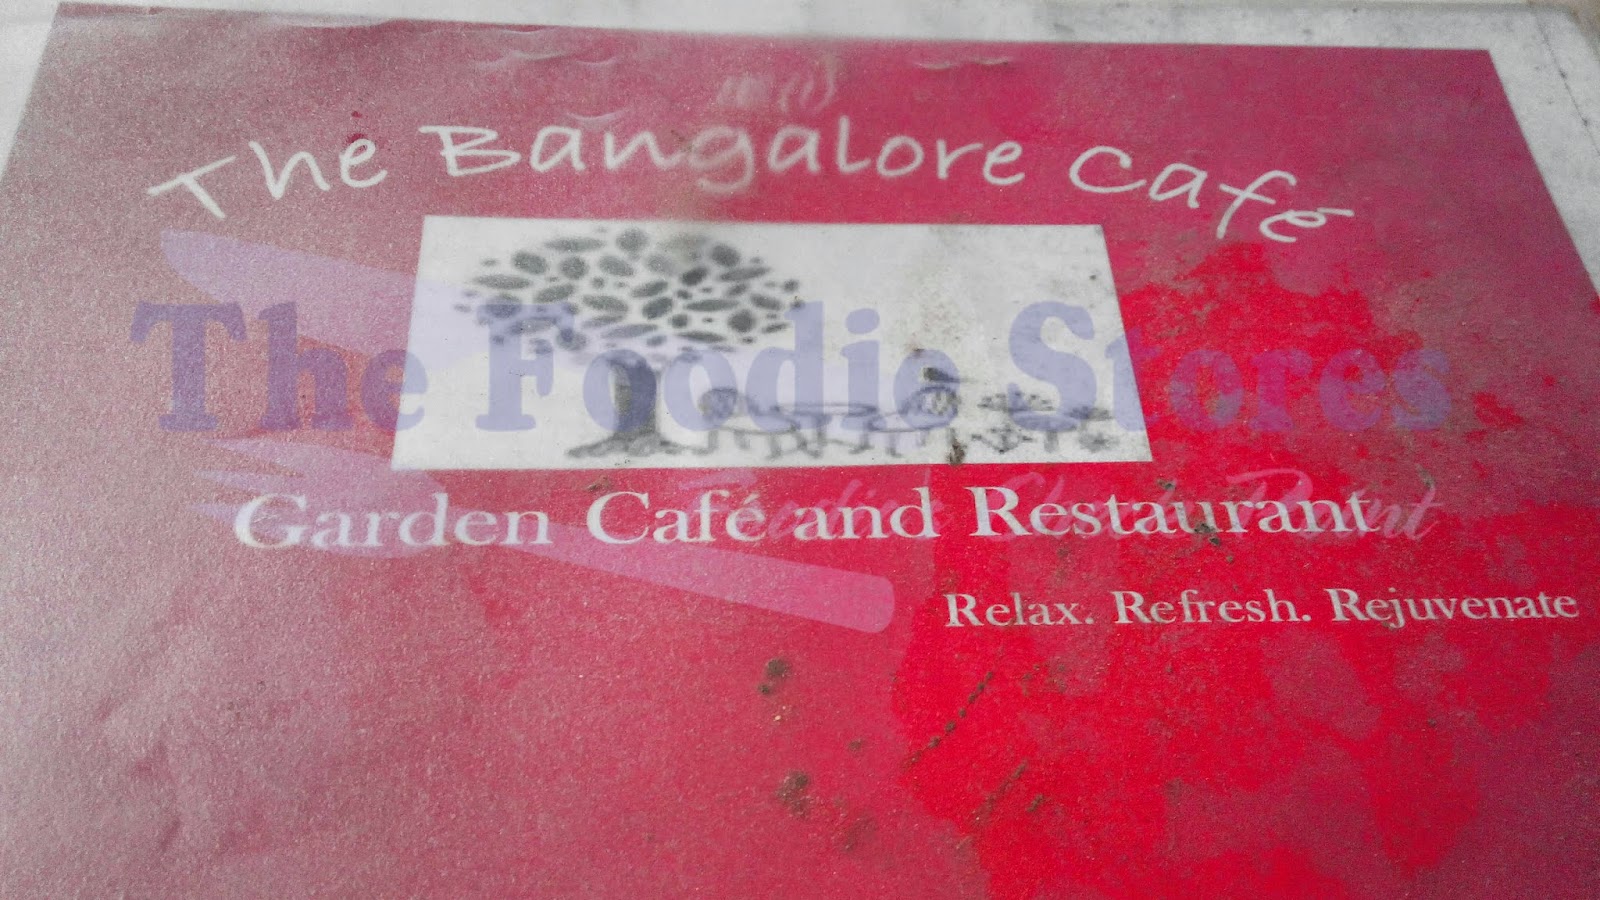 IE (I) The Bangalore Cafe